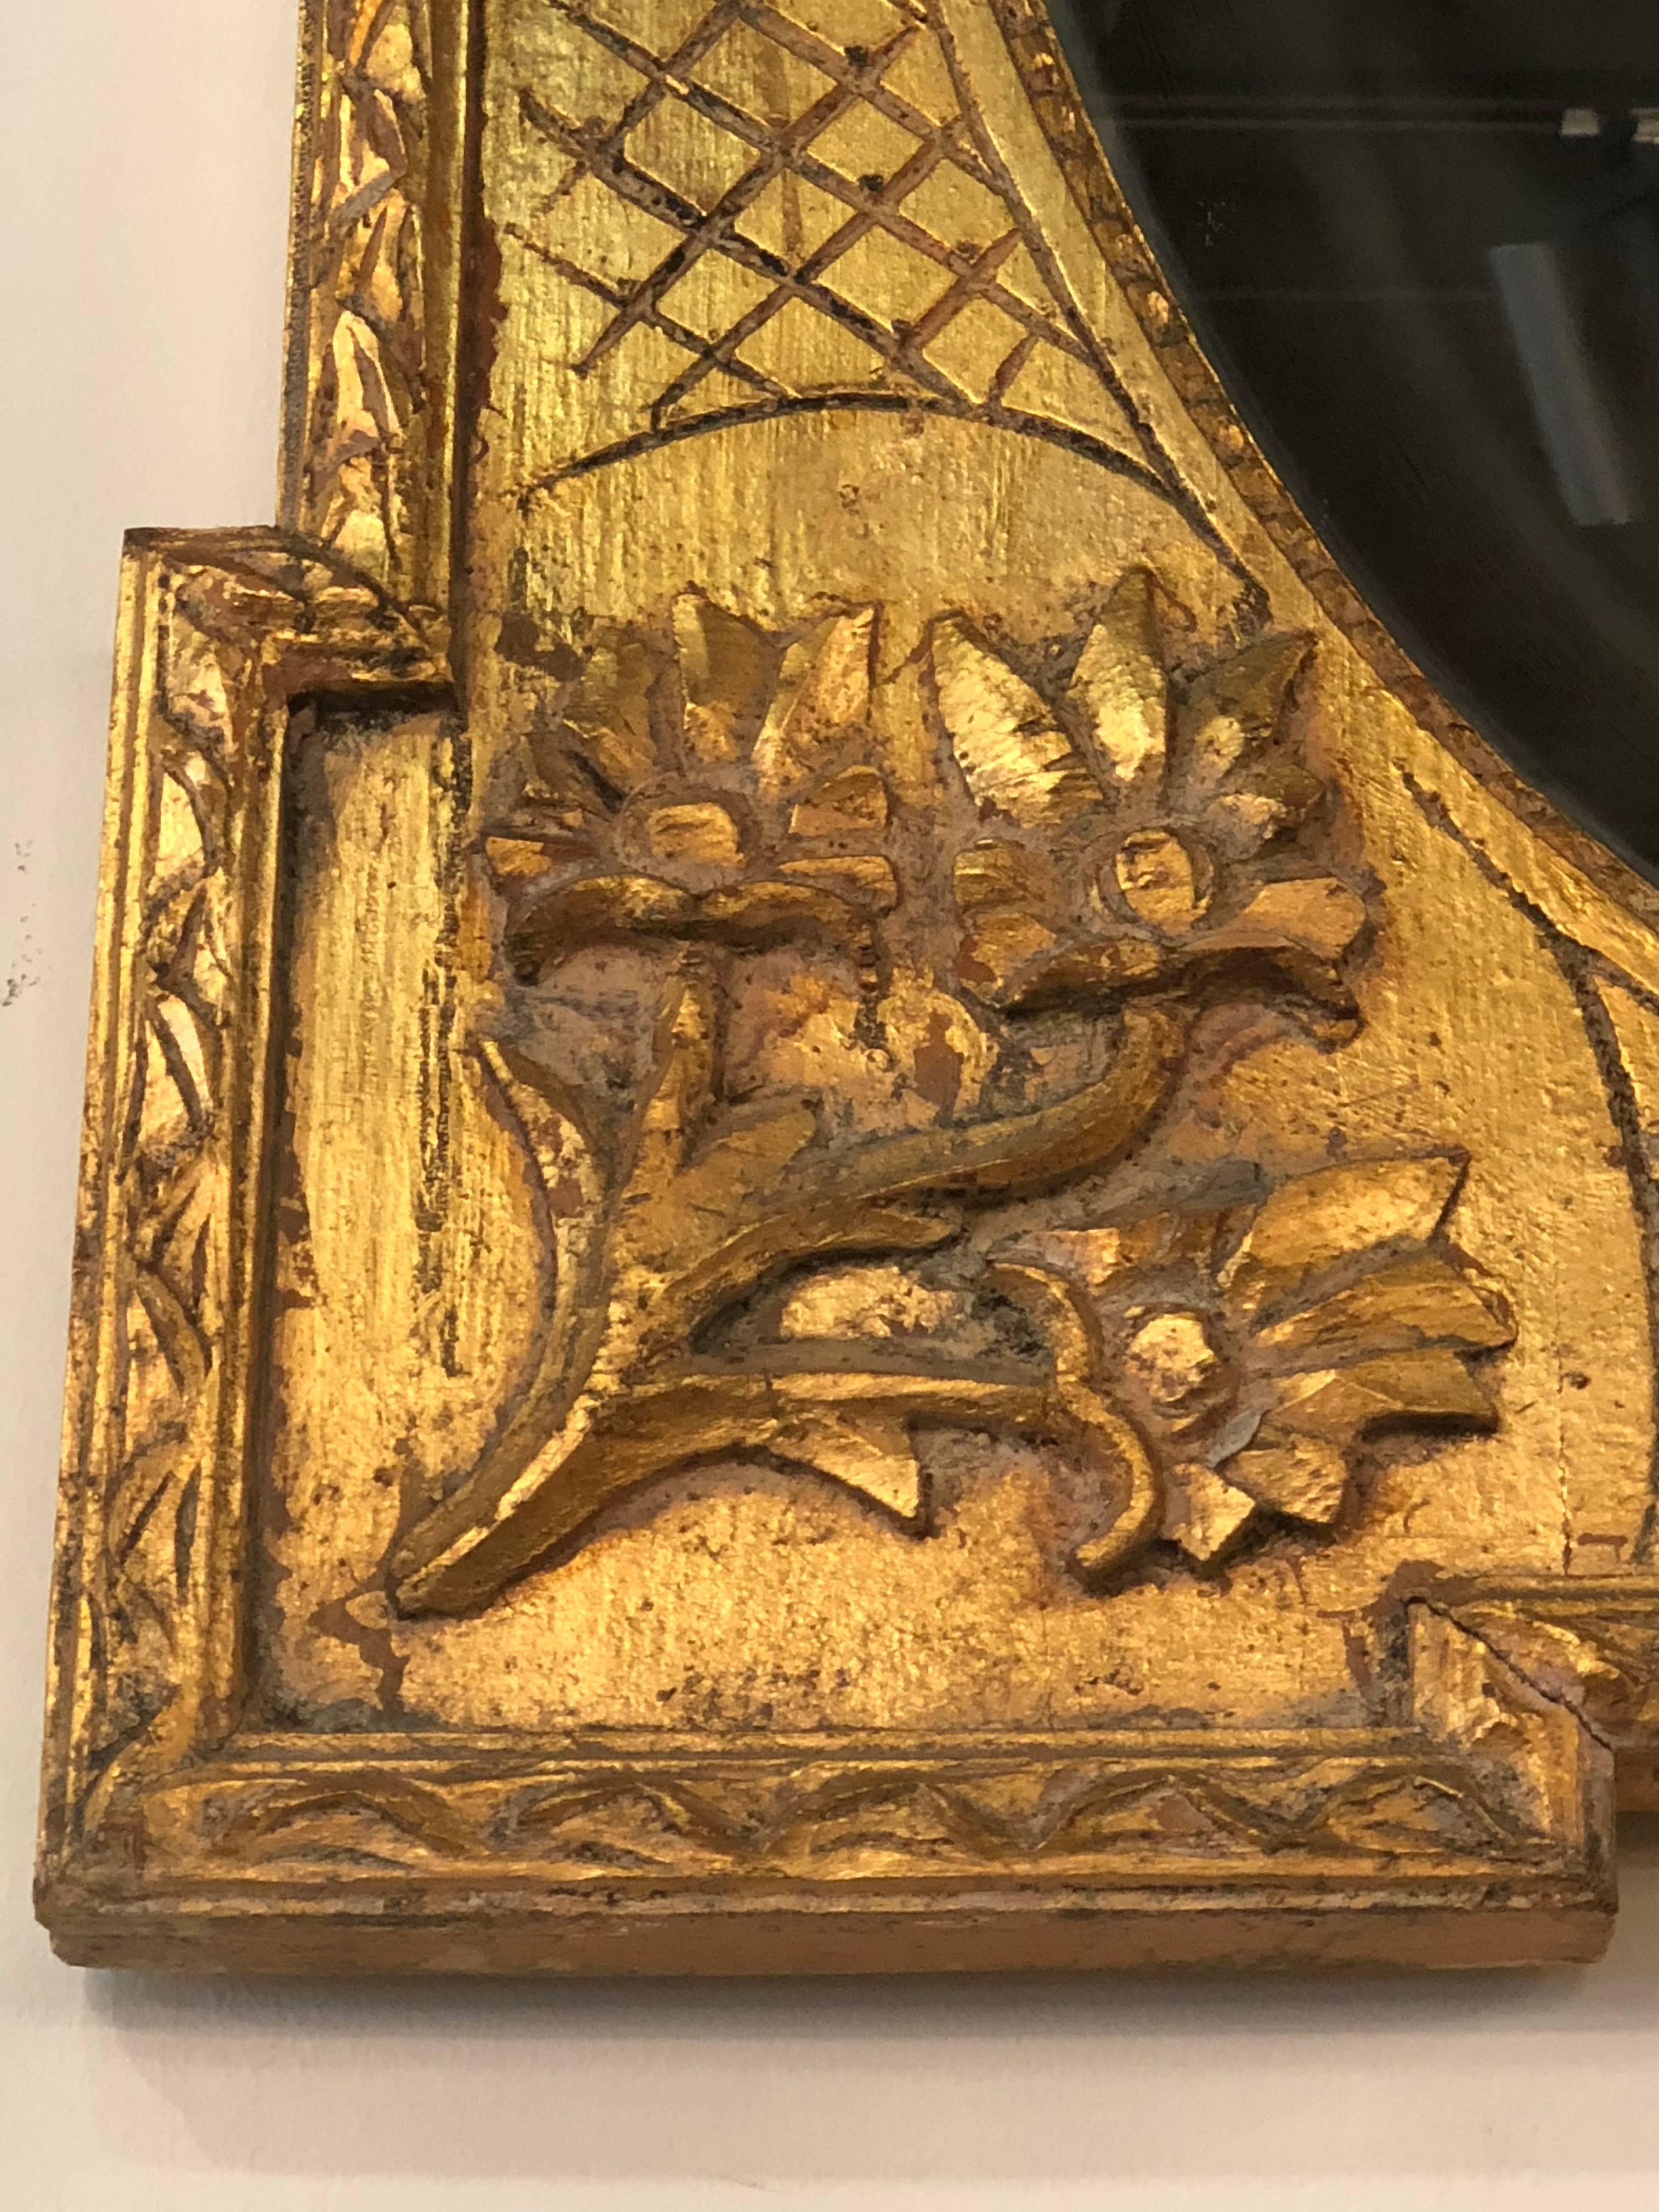 gold ornate mirror